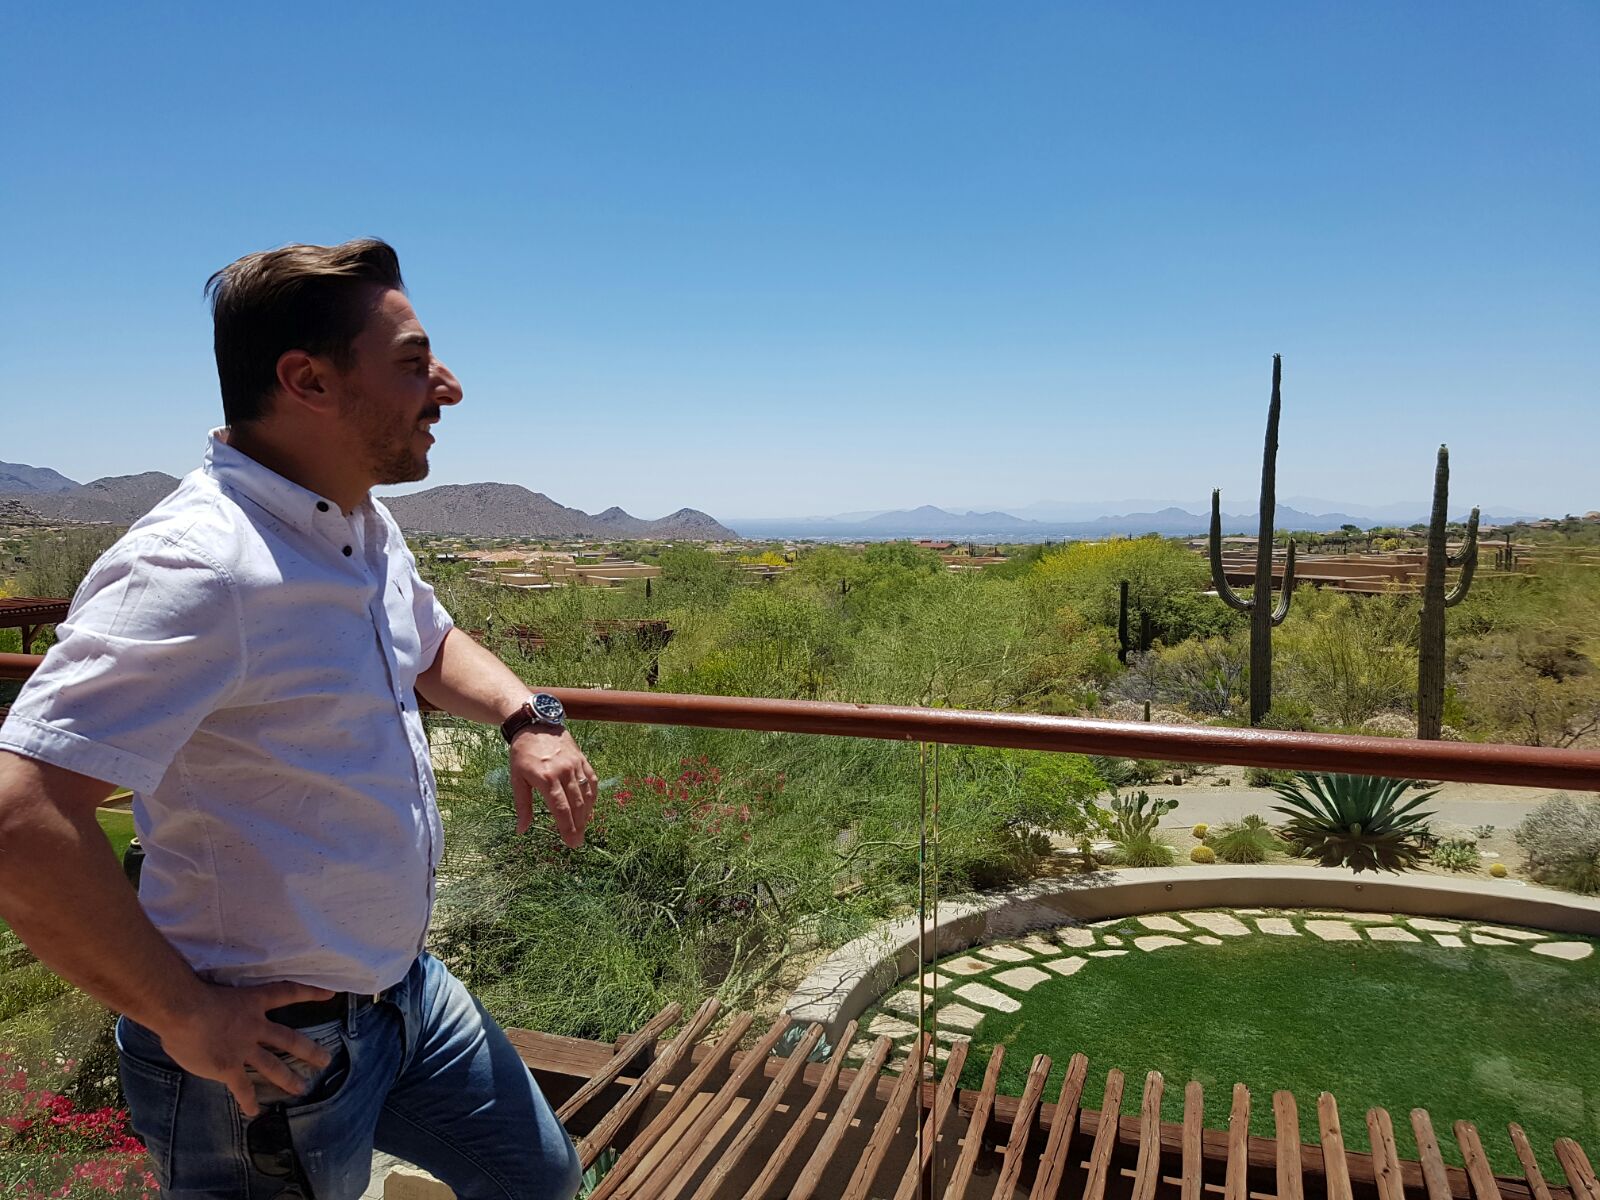 Picture of Jordi Roca in Phoenix during his trip before the bbva tour 2016